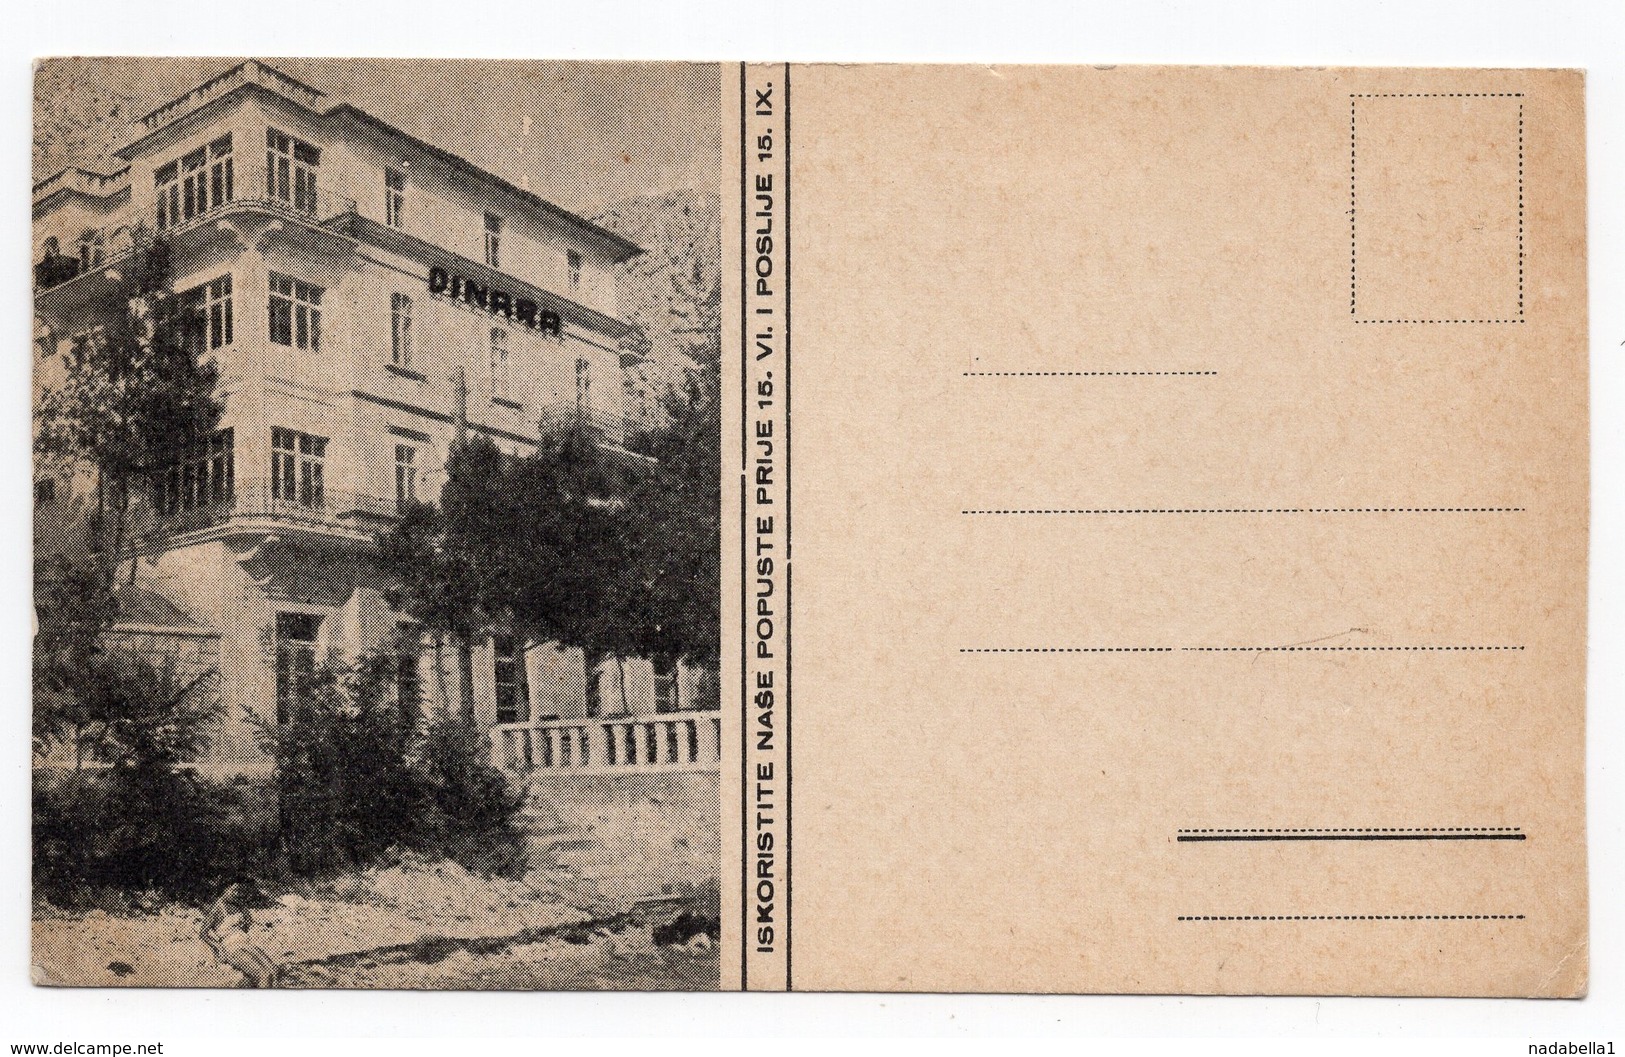 1950s YUGOSLAVIA, CROATIA, HOTEL DINARA, ILLUSTRATED POSTCARD, MINT - Yugoslavia